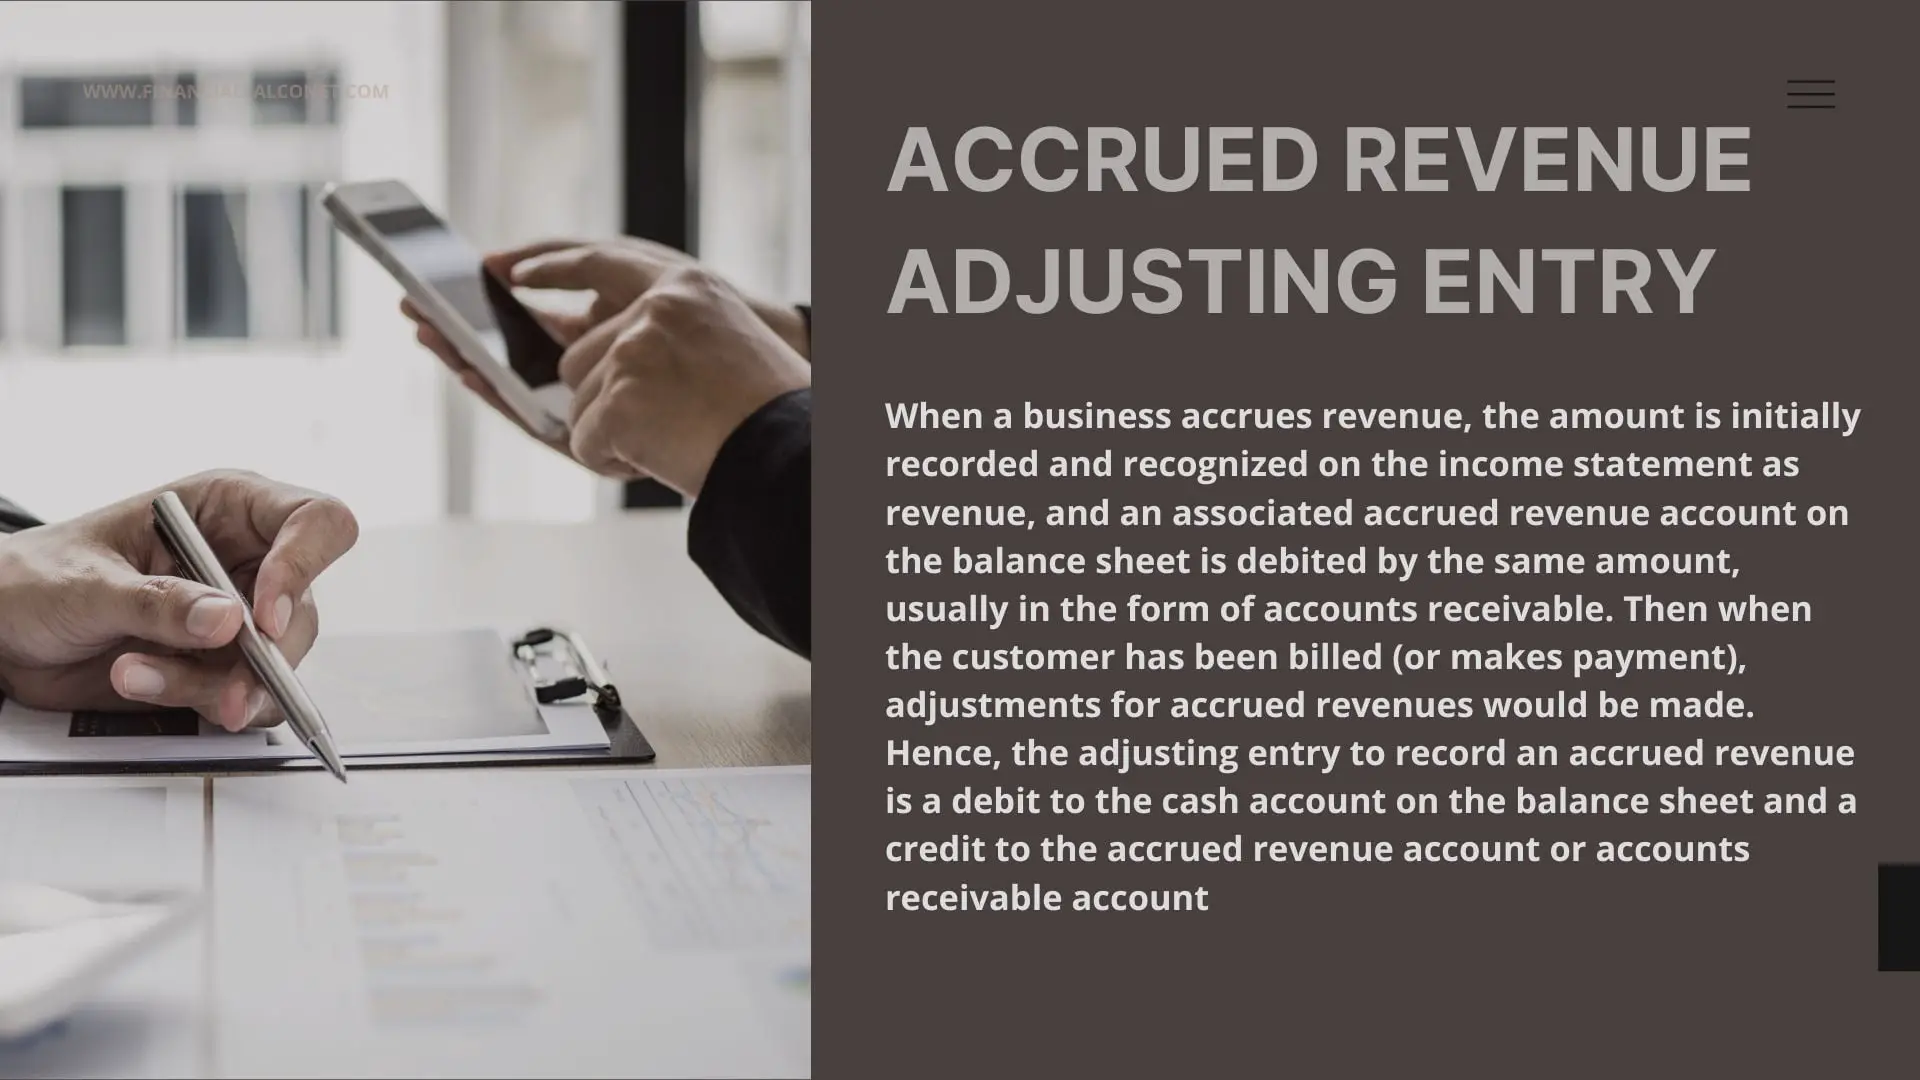 Accrued revenue adjusting entry
